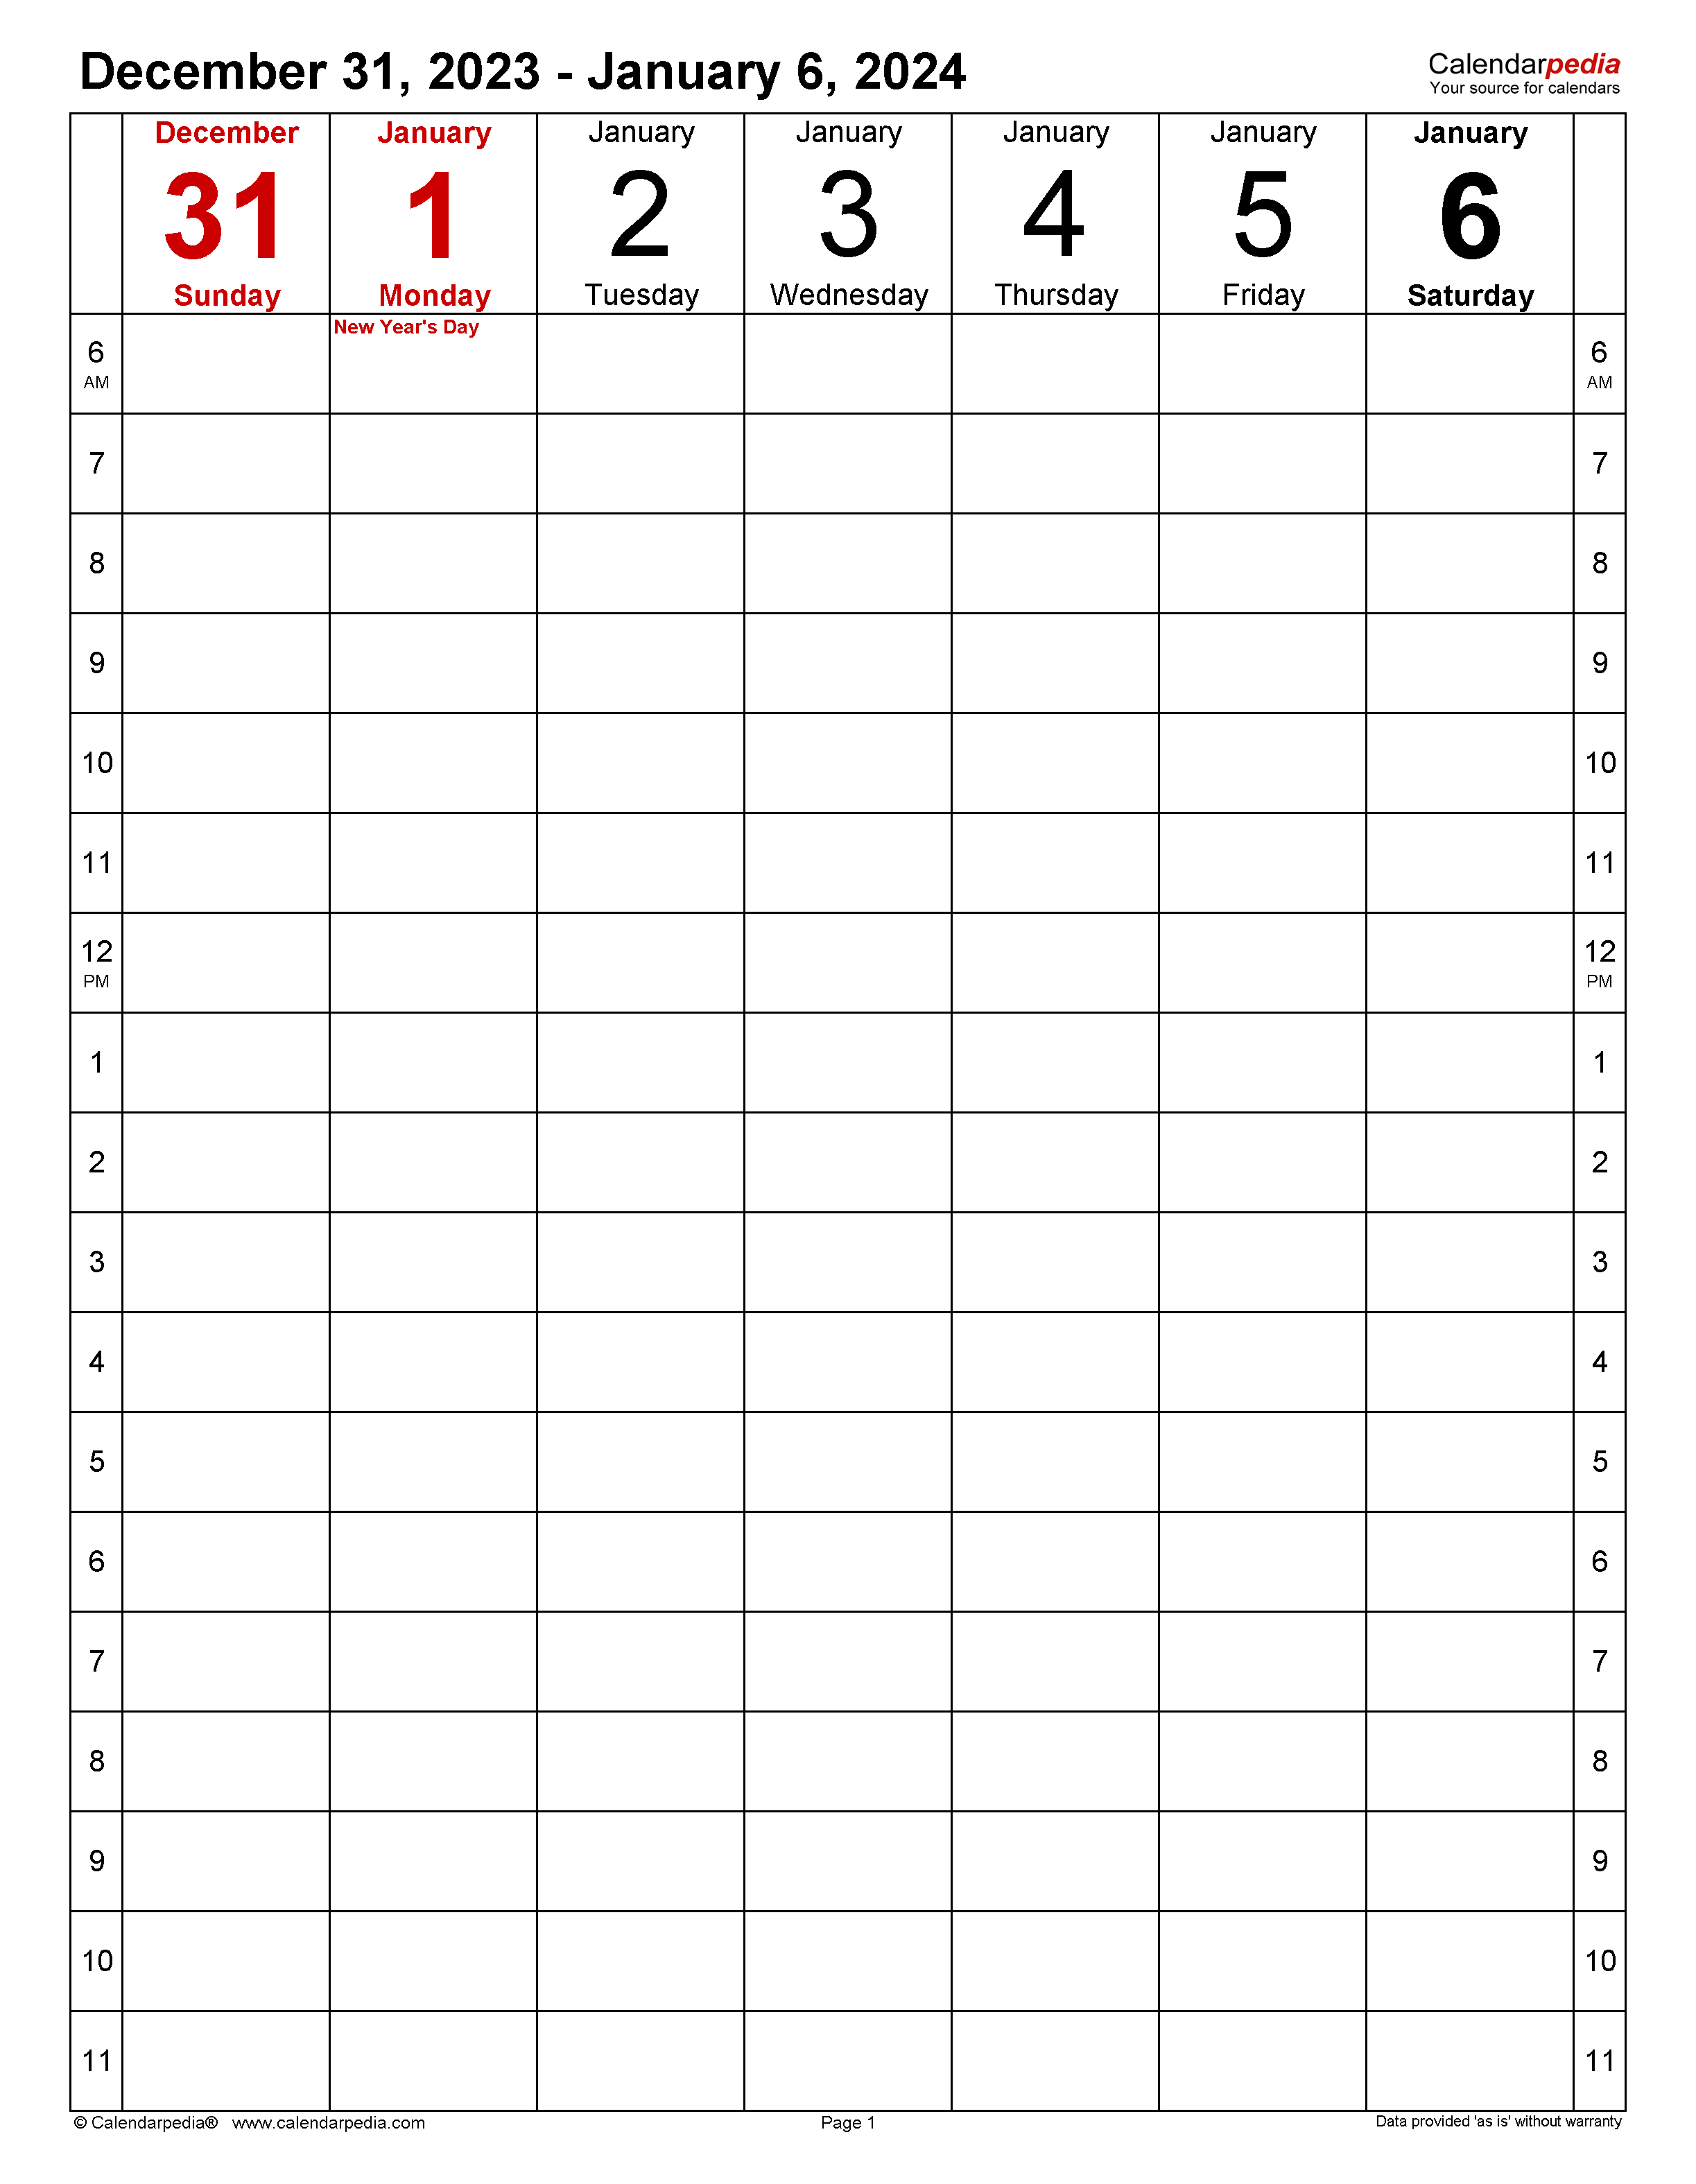 Weekly Calendars 2024 For Pdf - 12 Free Printable Templates for Printable Weekly Calendar 2024